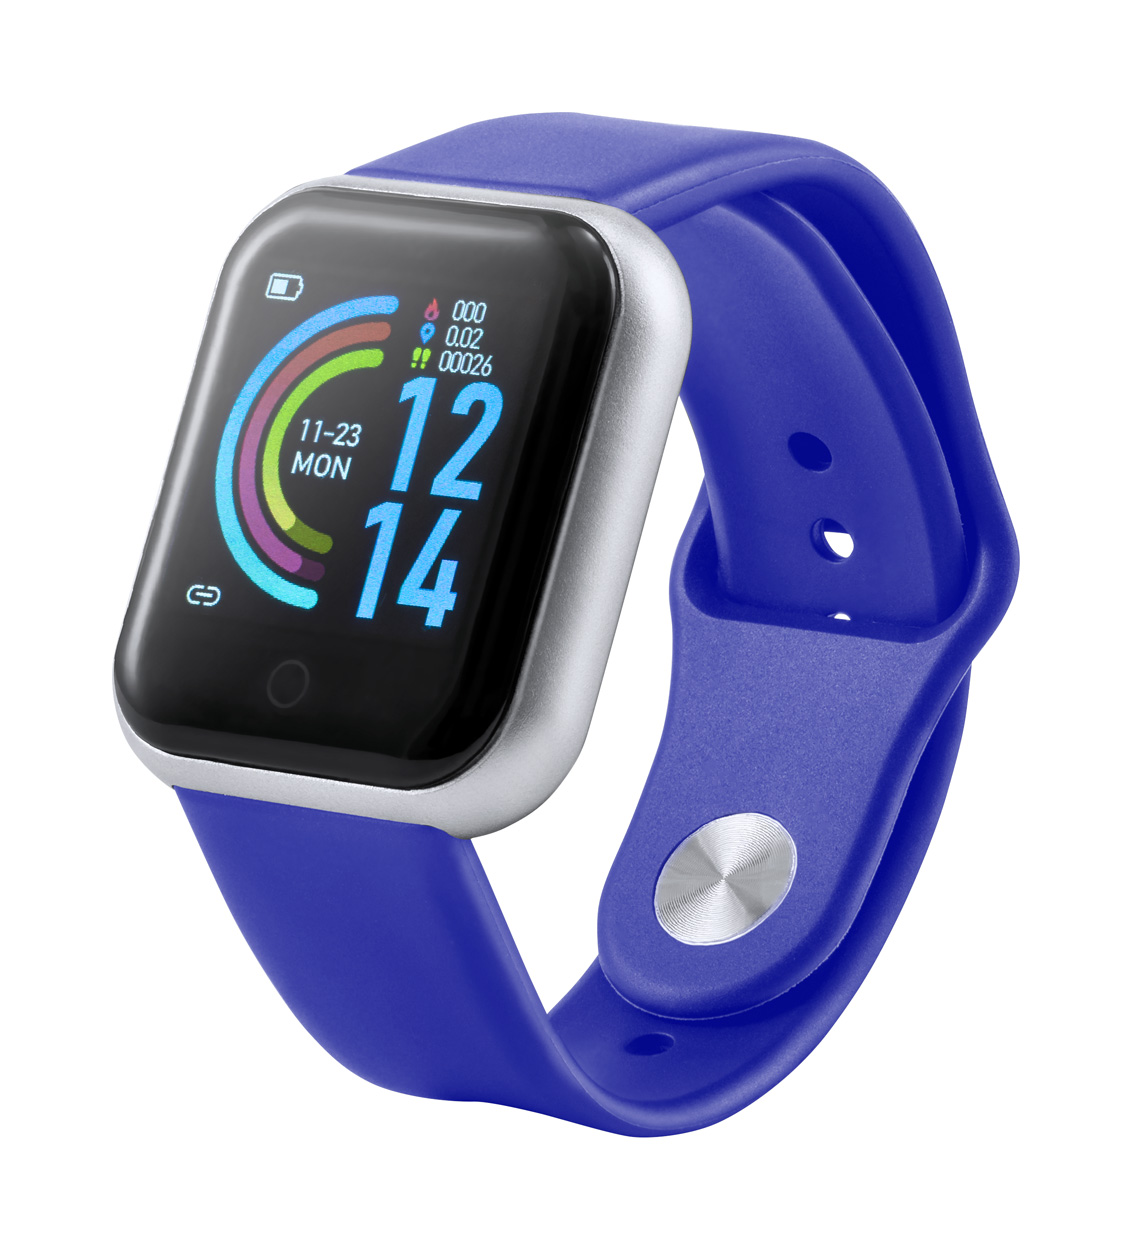 Simont smart watch - blue